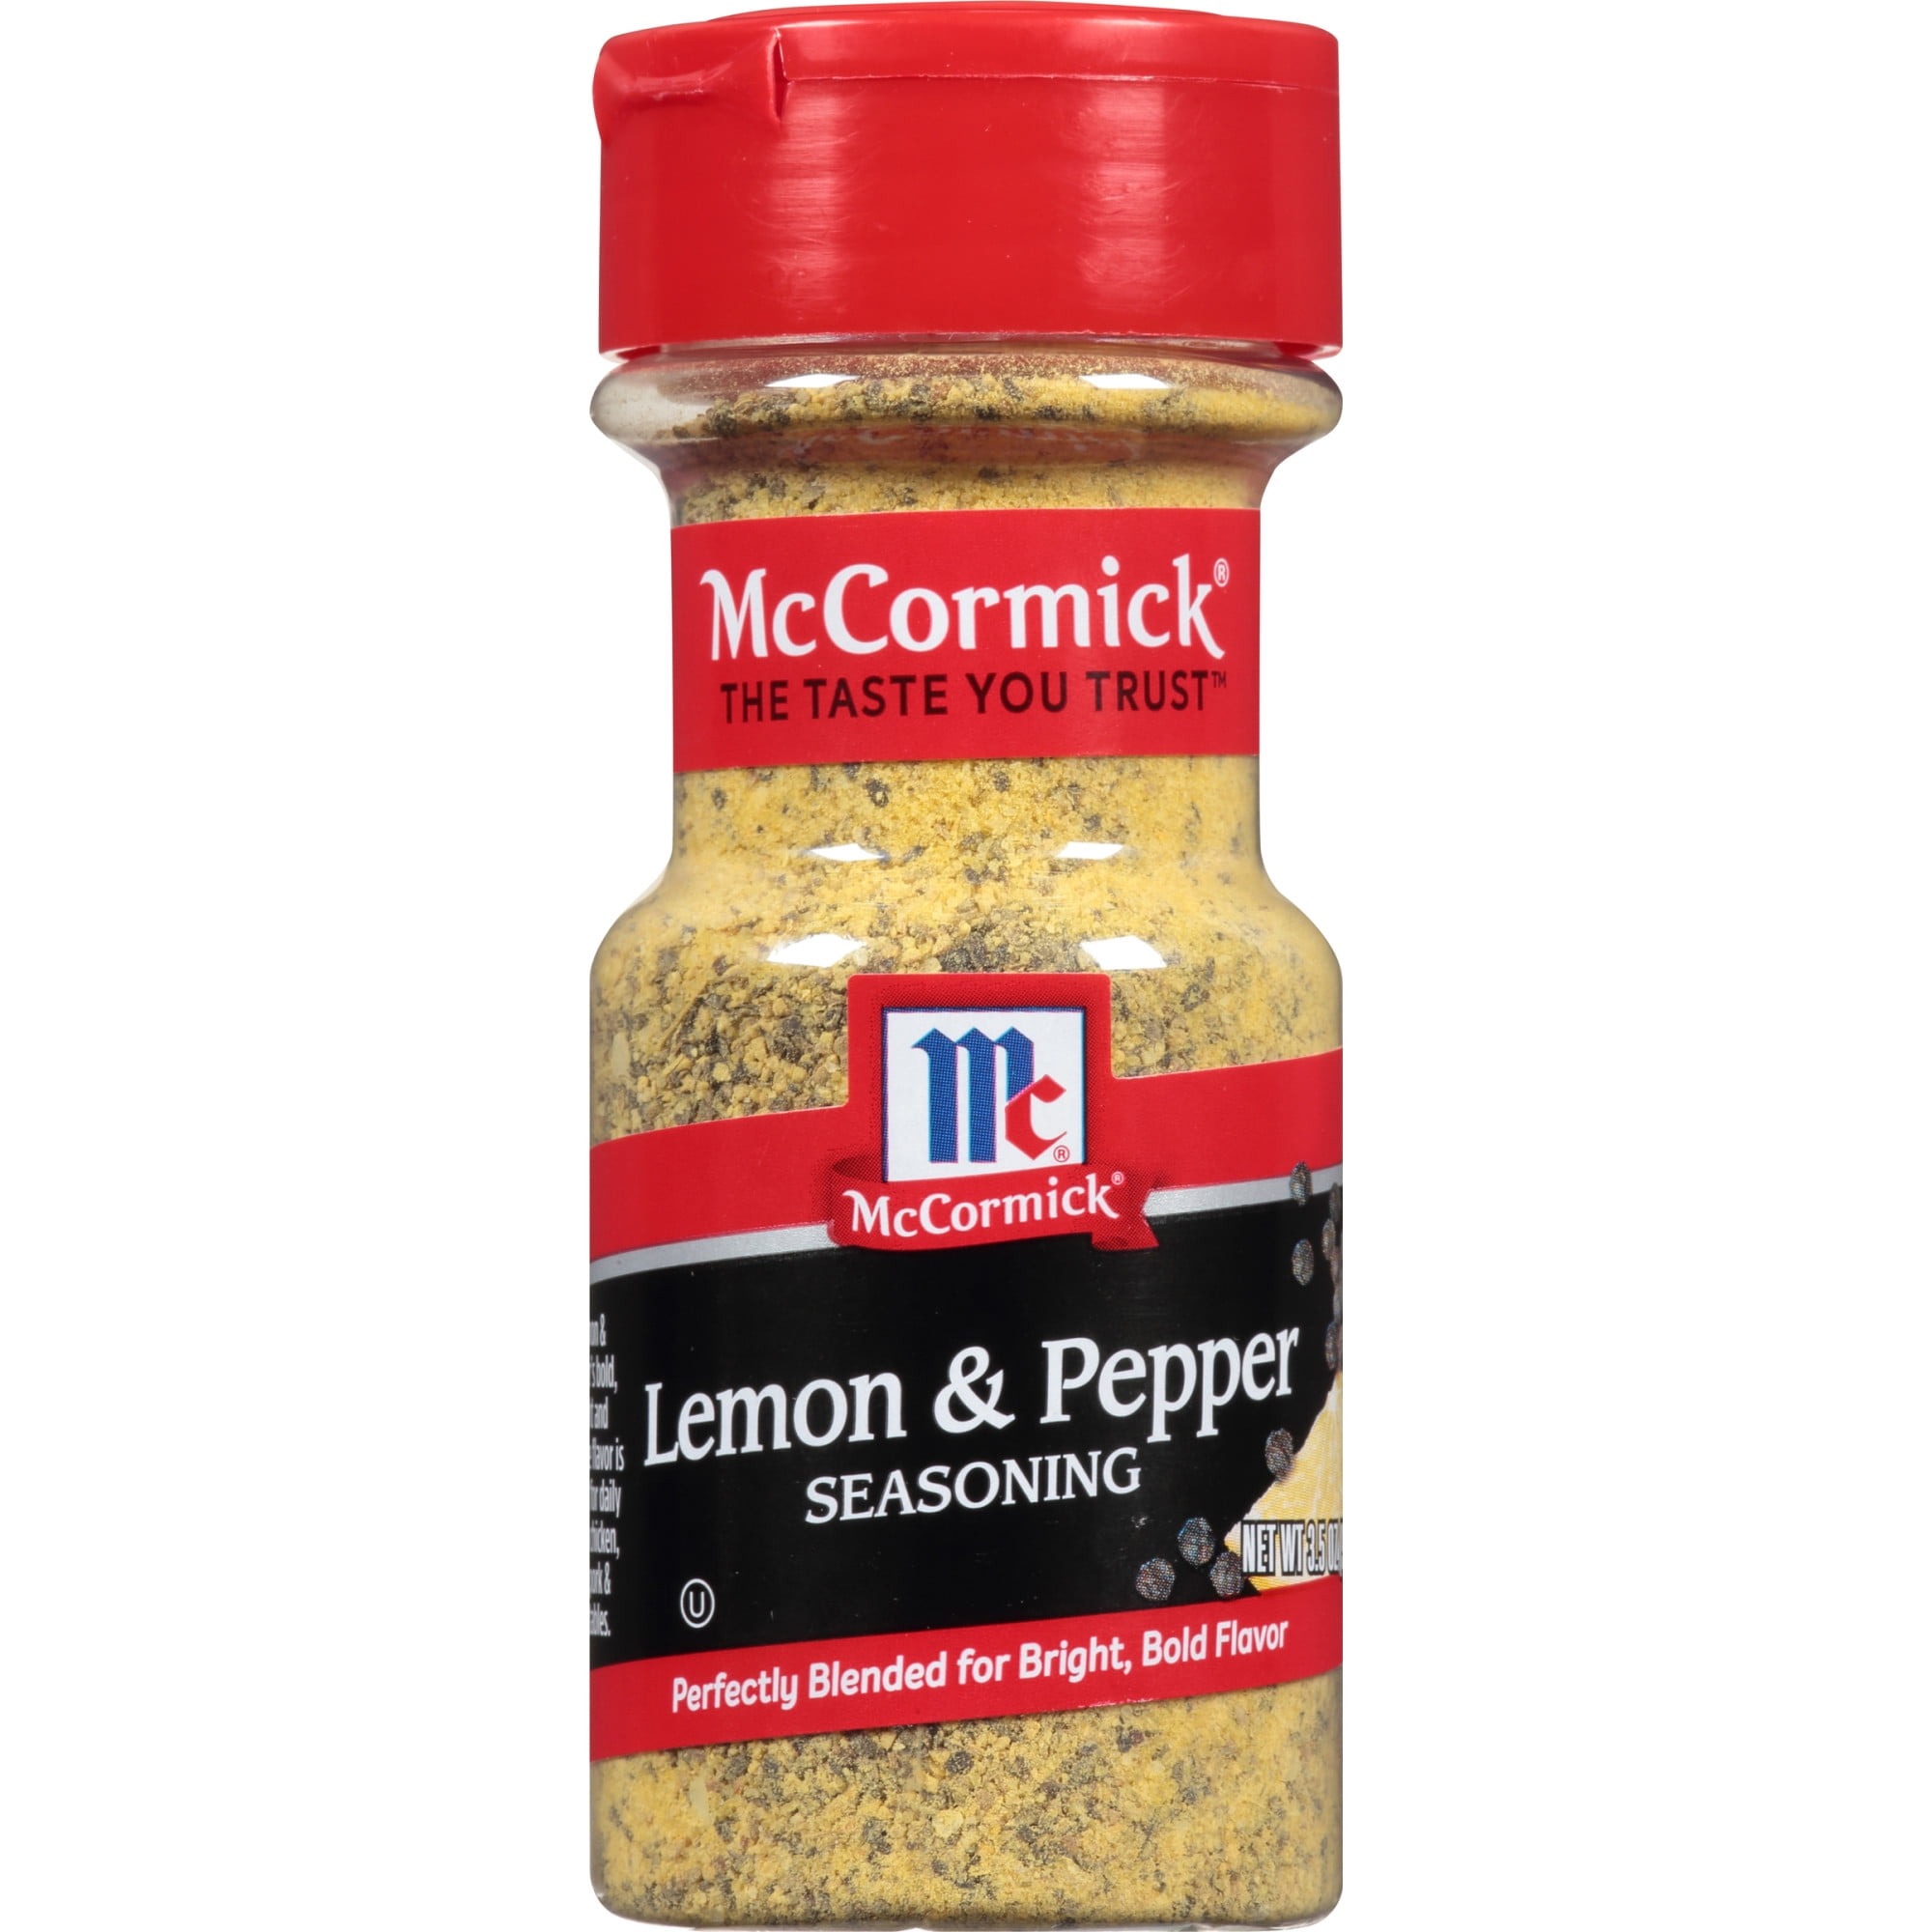 McCormick Lemon & Pepper Seasoning, 3.5 oz Mixed Spices & Seasonings